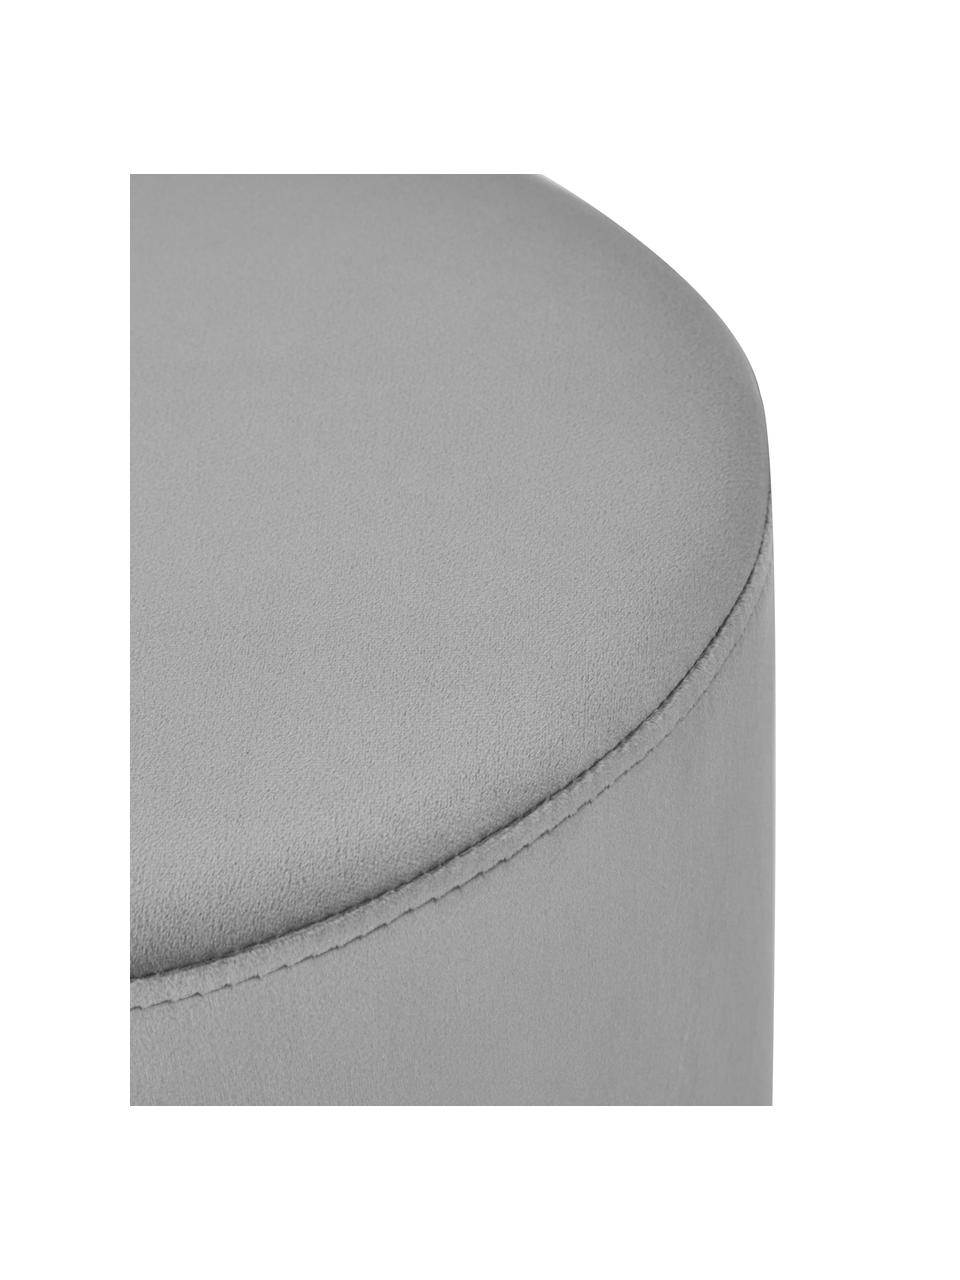 Samt-Hocker Daisy in Grau, Bezug: Samt (Polyester) Der hoch, Rahmen: Sperrholz, Samt Grau, Ø 38 x H 45 cm